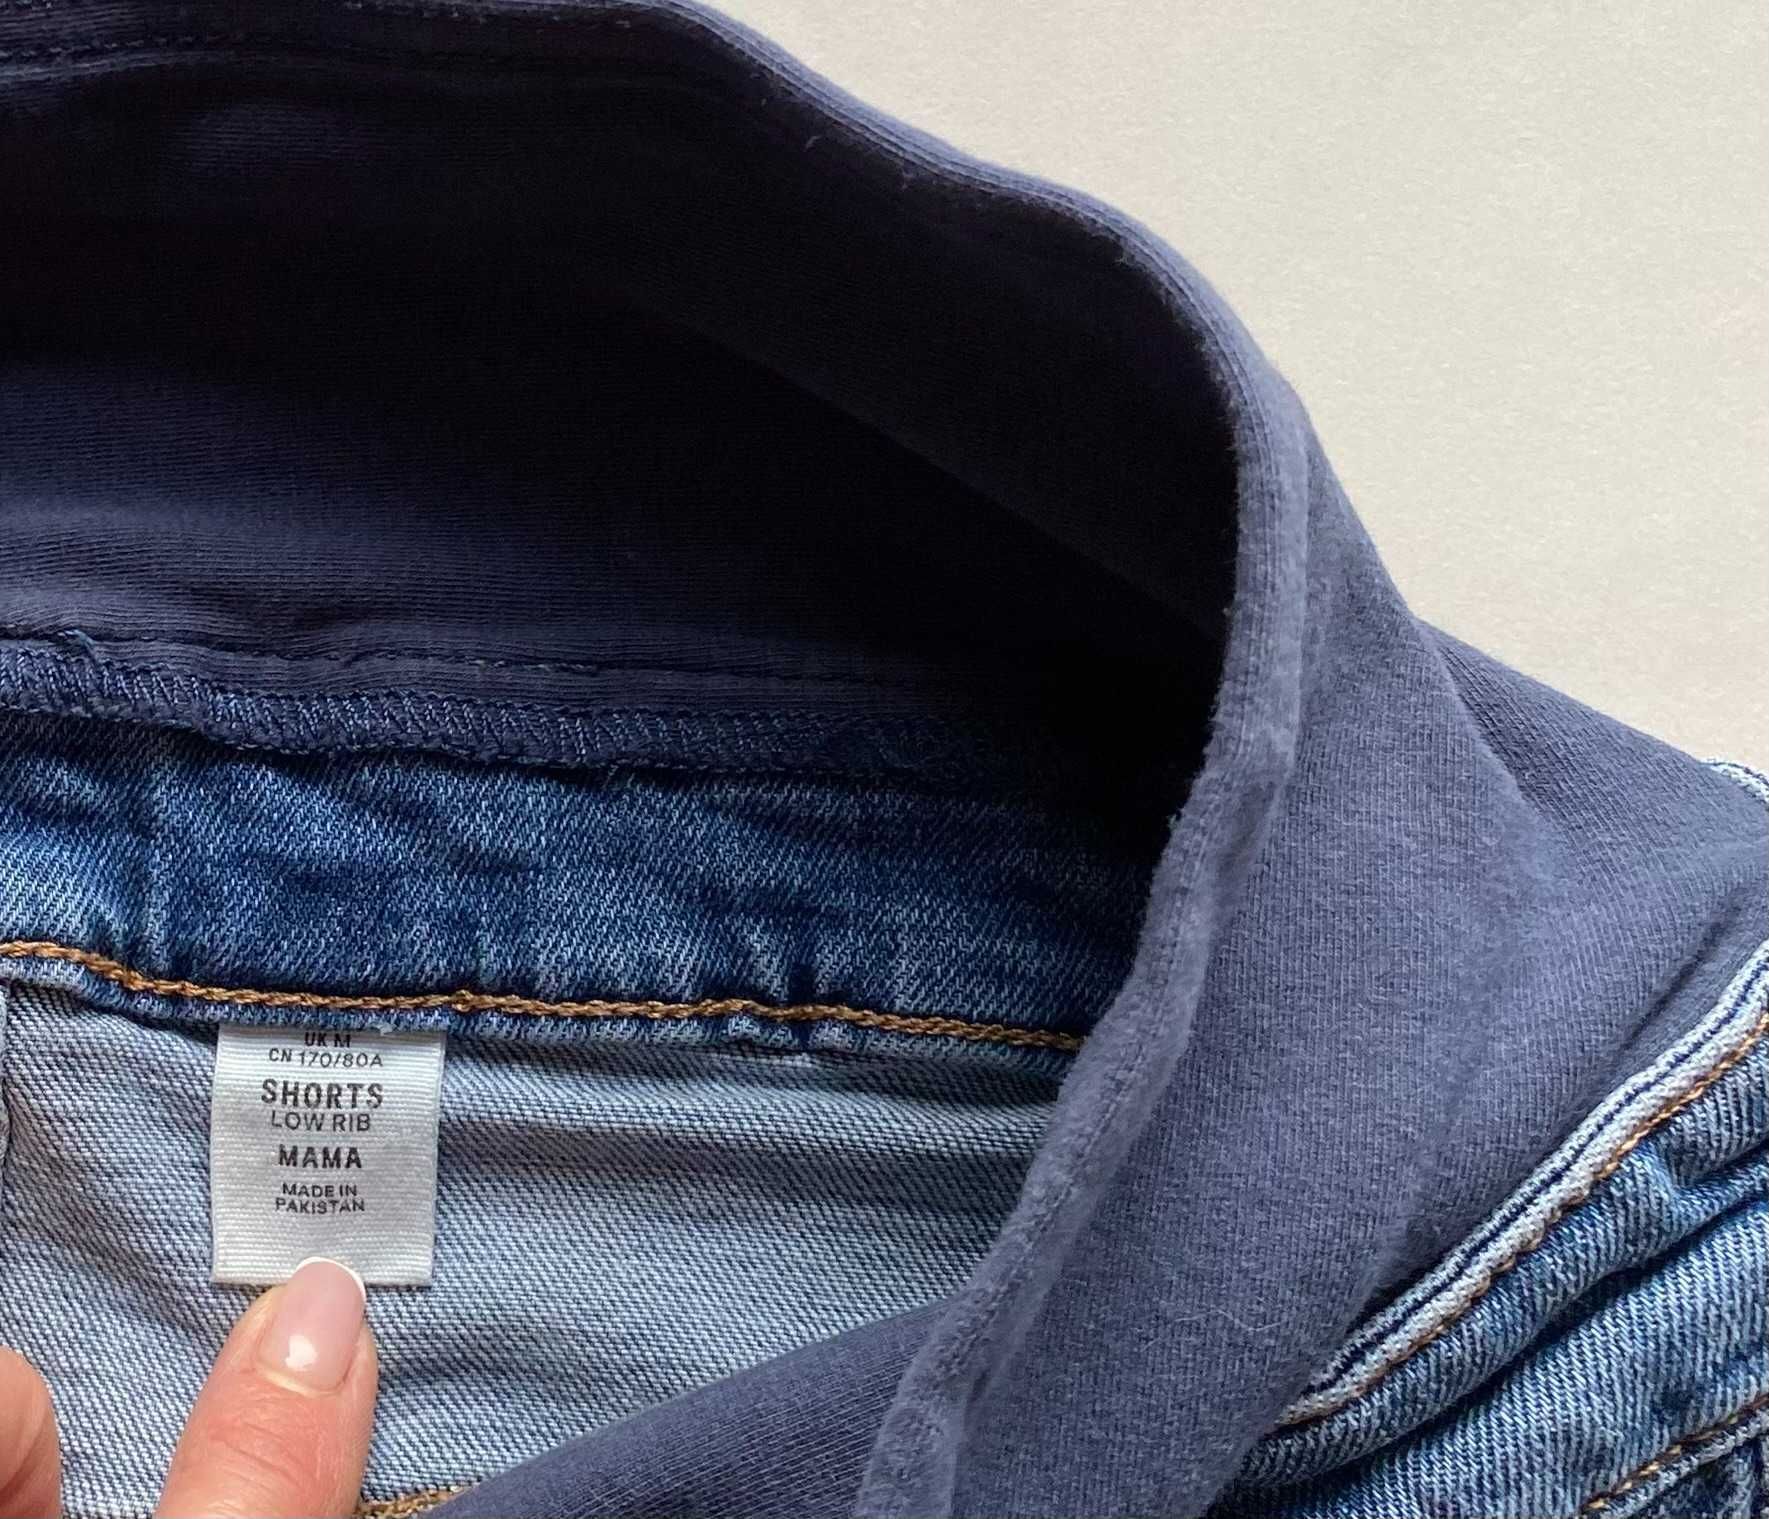 H&M mama spodenki jeansowe ciążowe M, 38 170/80A